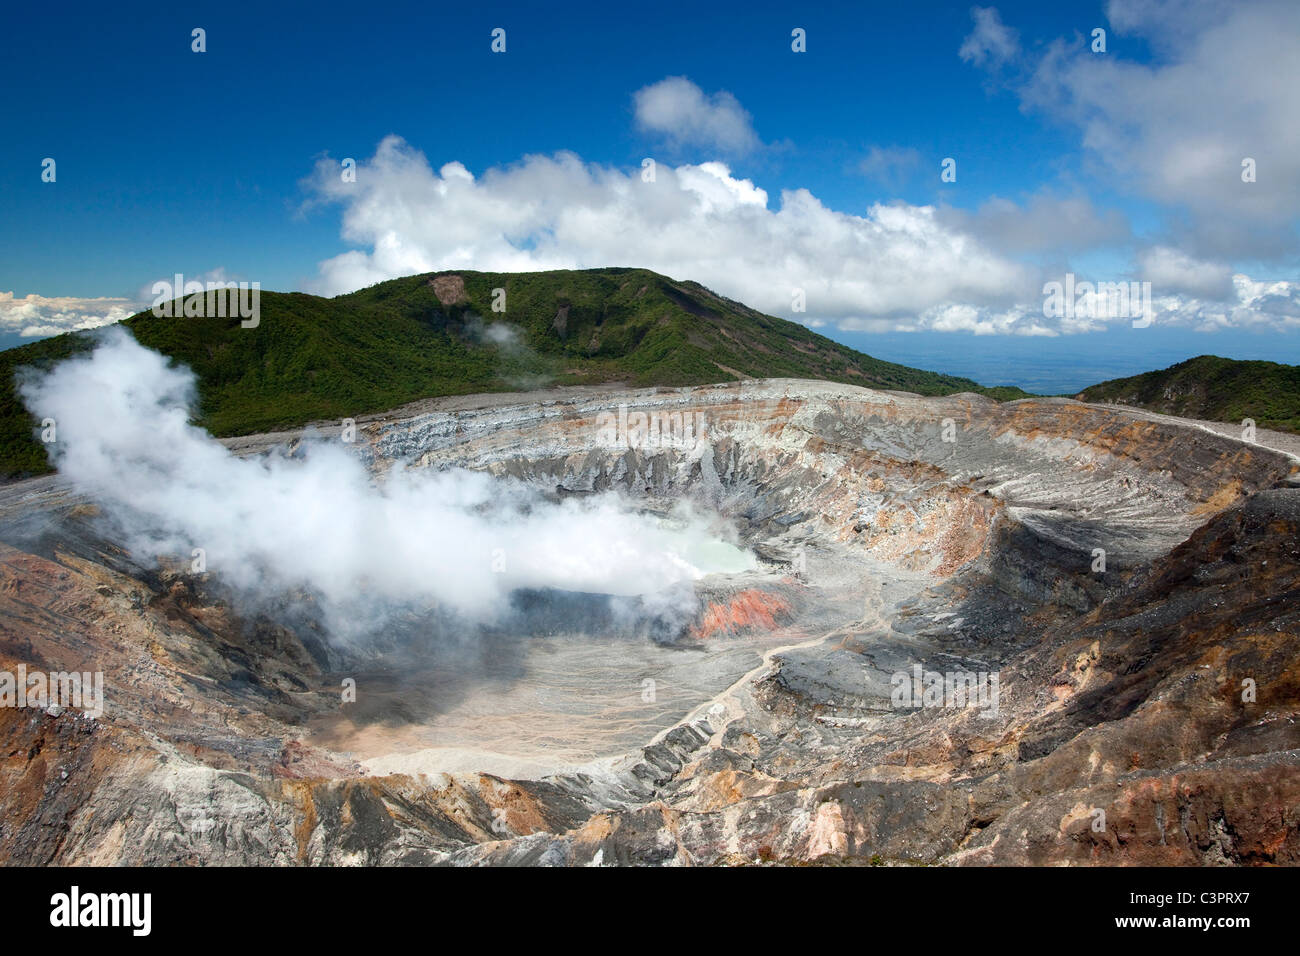 Am Rande eines aktiven Krater-Vulkans in Poas Volcano National Park in Costa Rica. Stockfoto